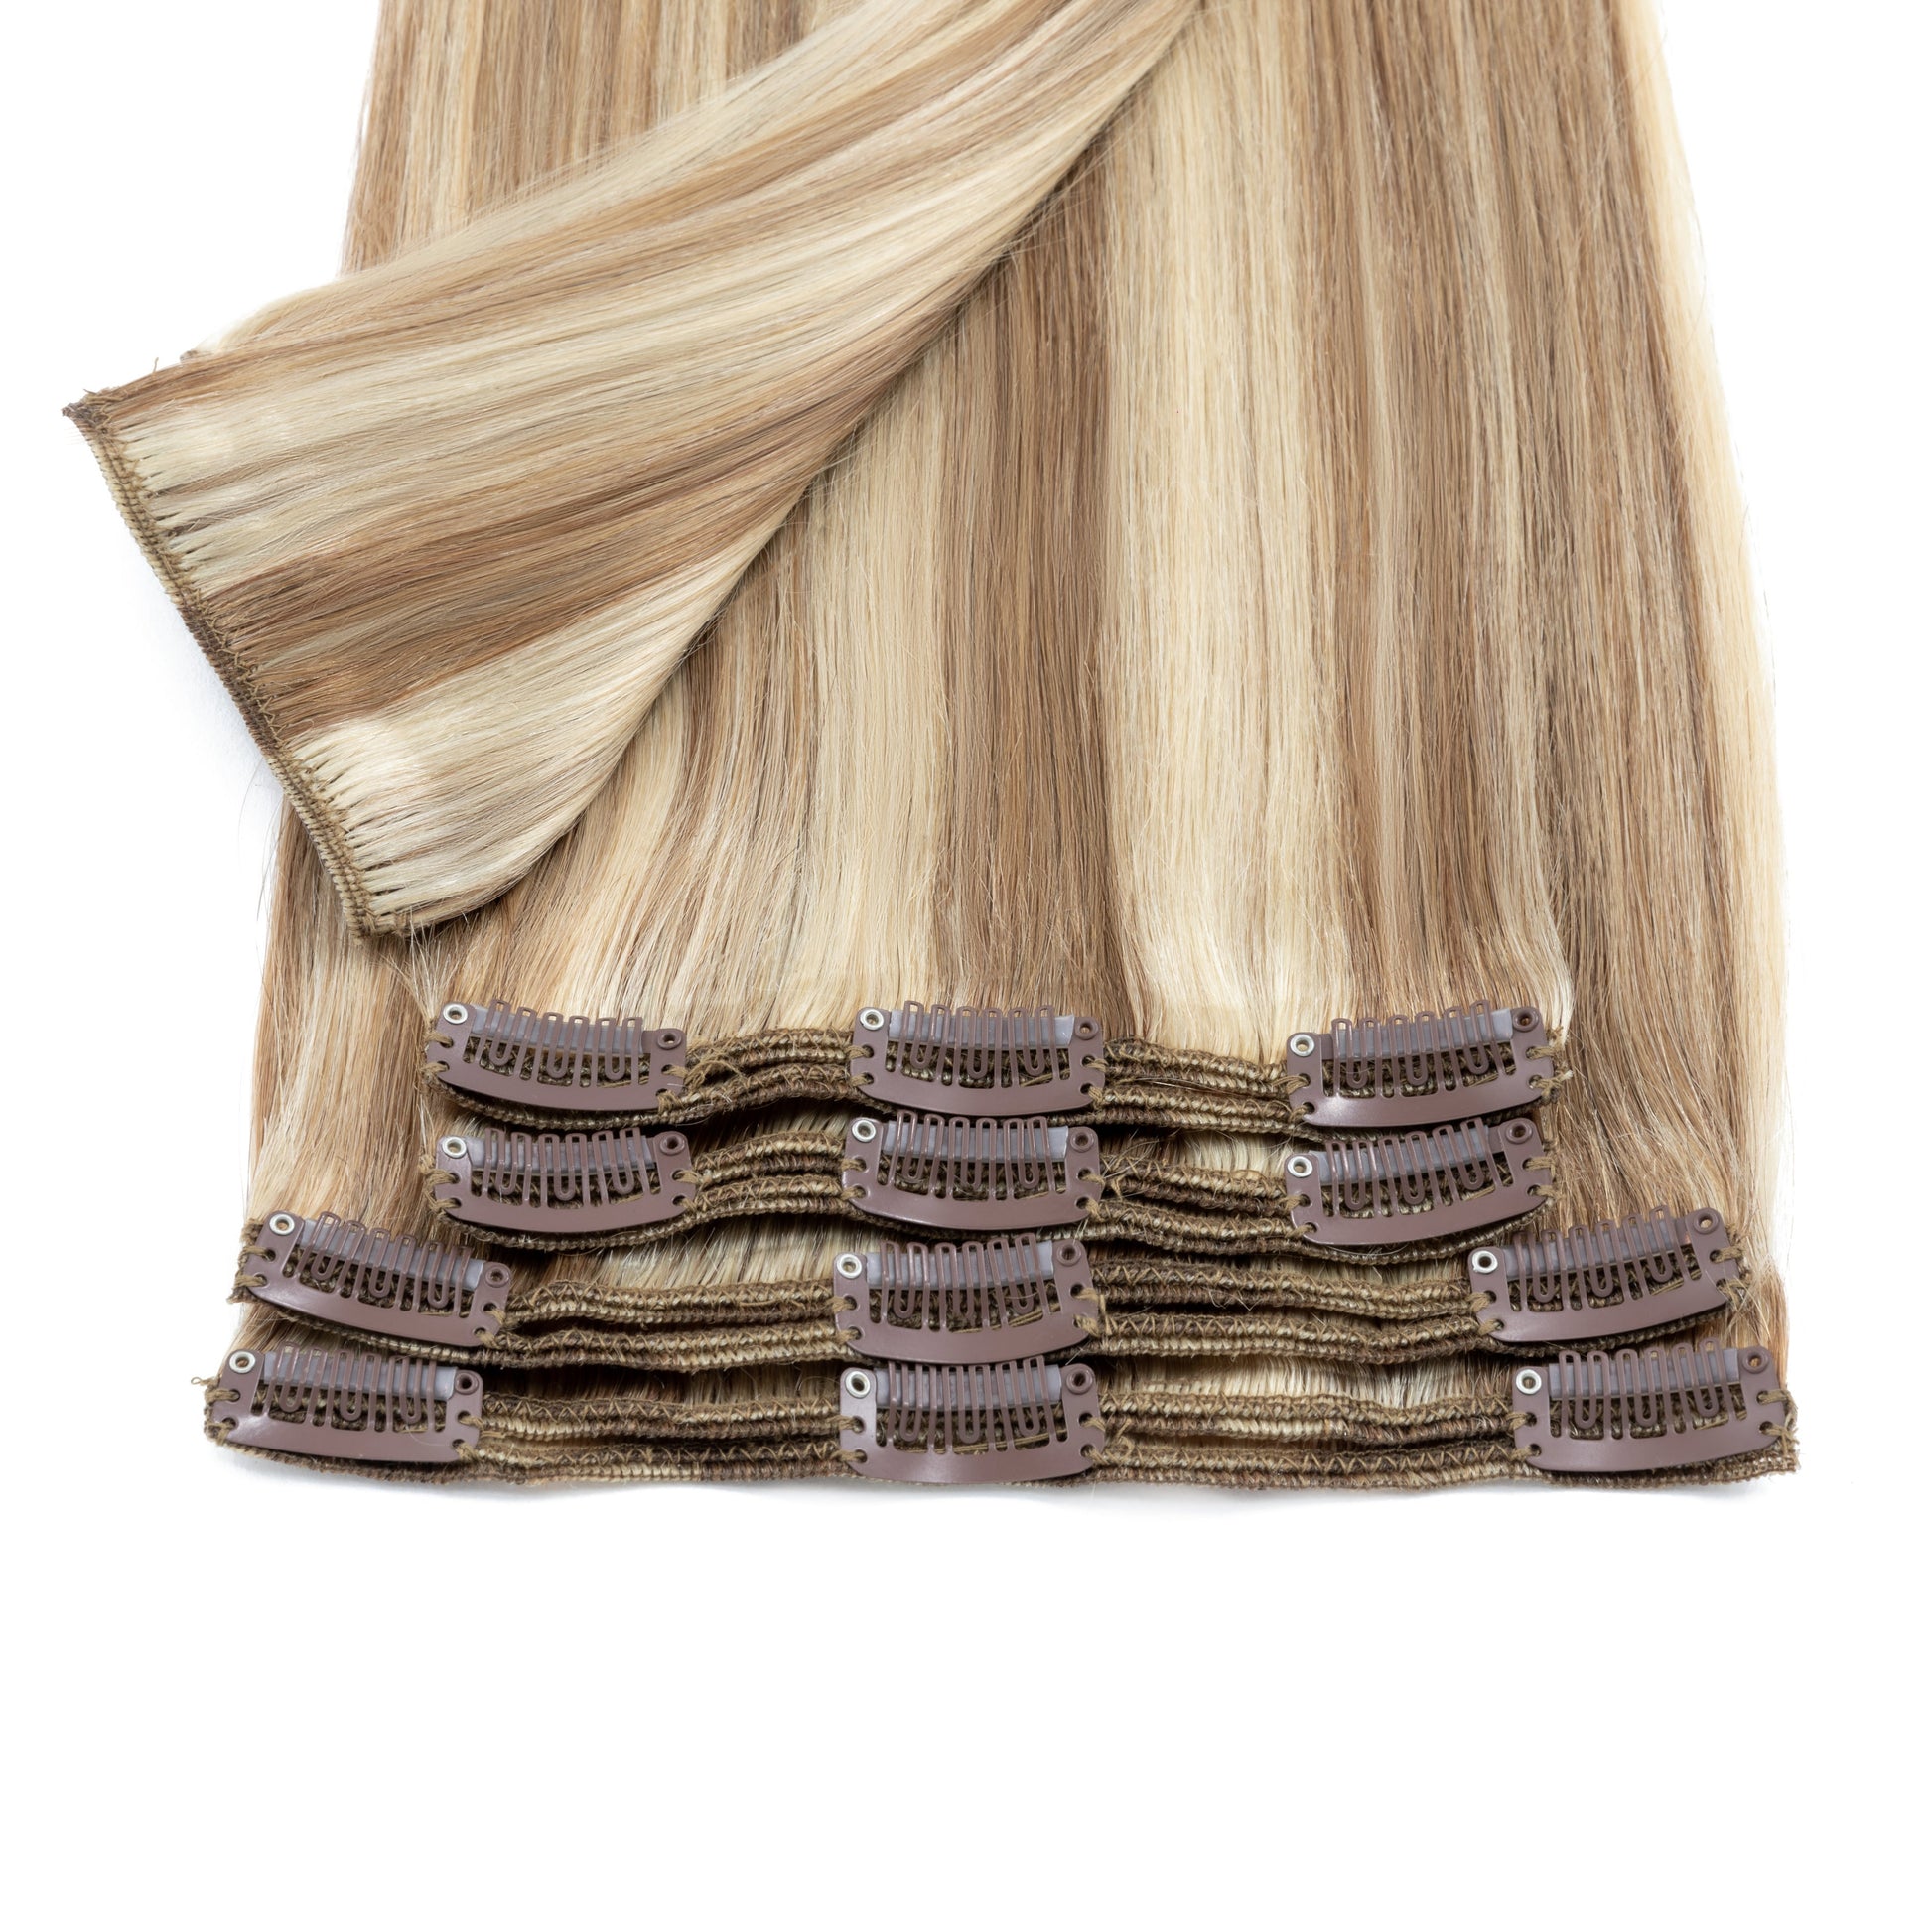 SEGOHAIR 8pcs Clip In Hair Extensions Real Human Hair Golden Brown Blonde segohair.com